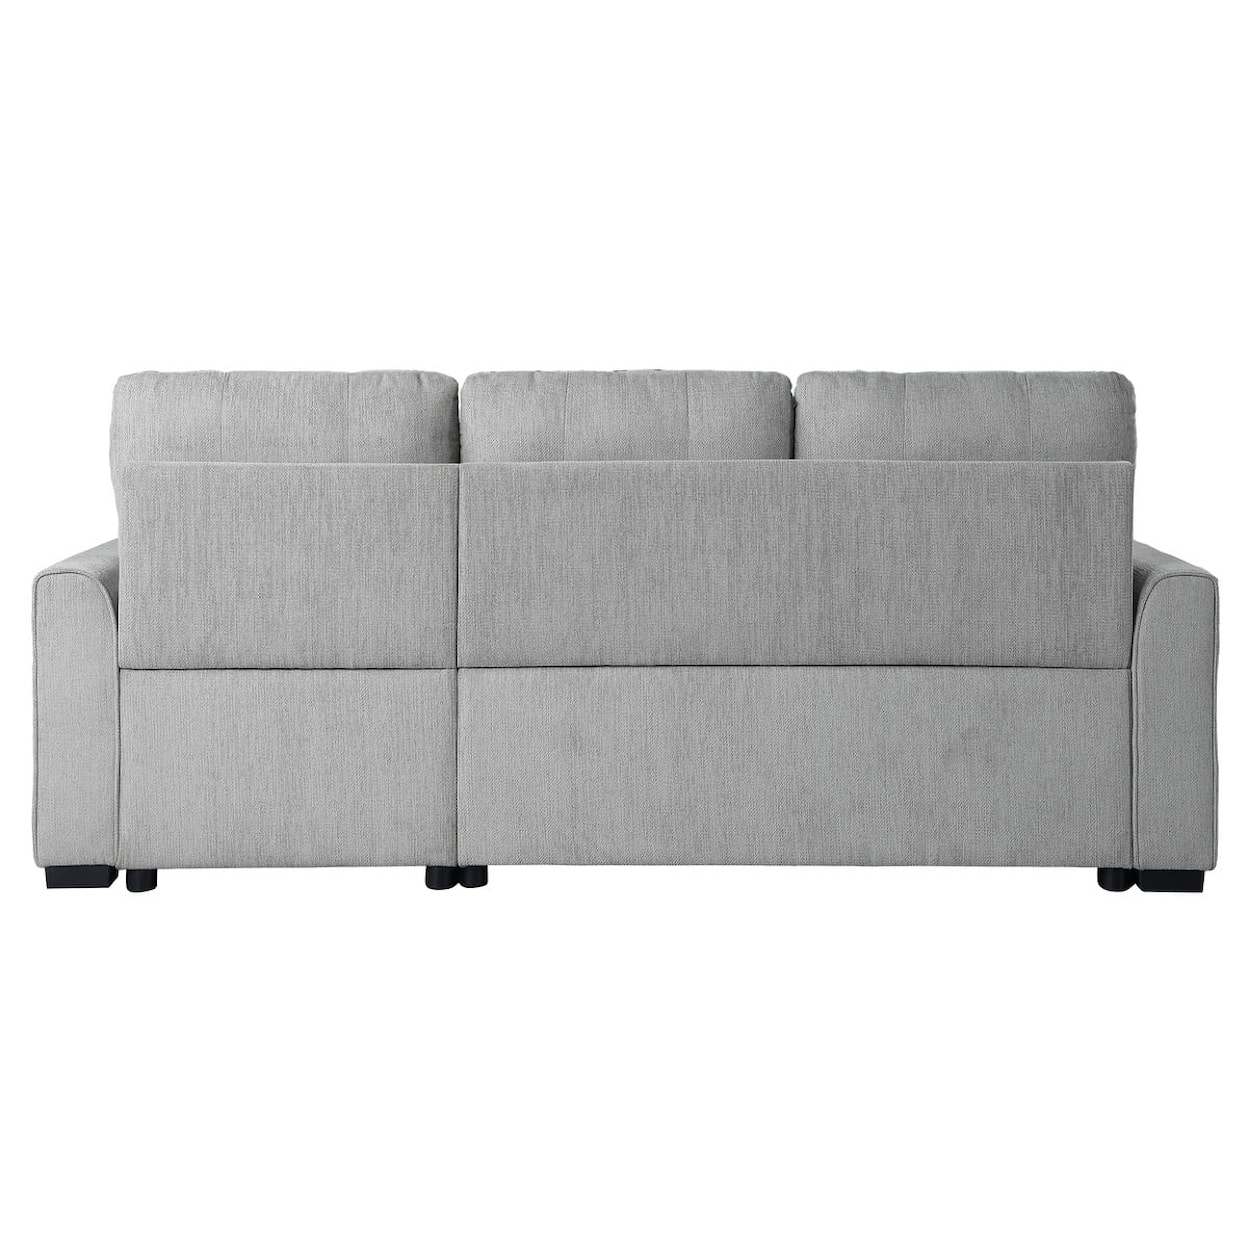 Homelegance Carolina 2-Piece Sectional Sofa